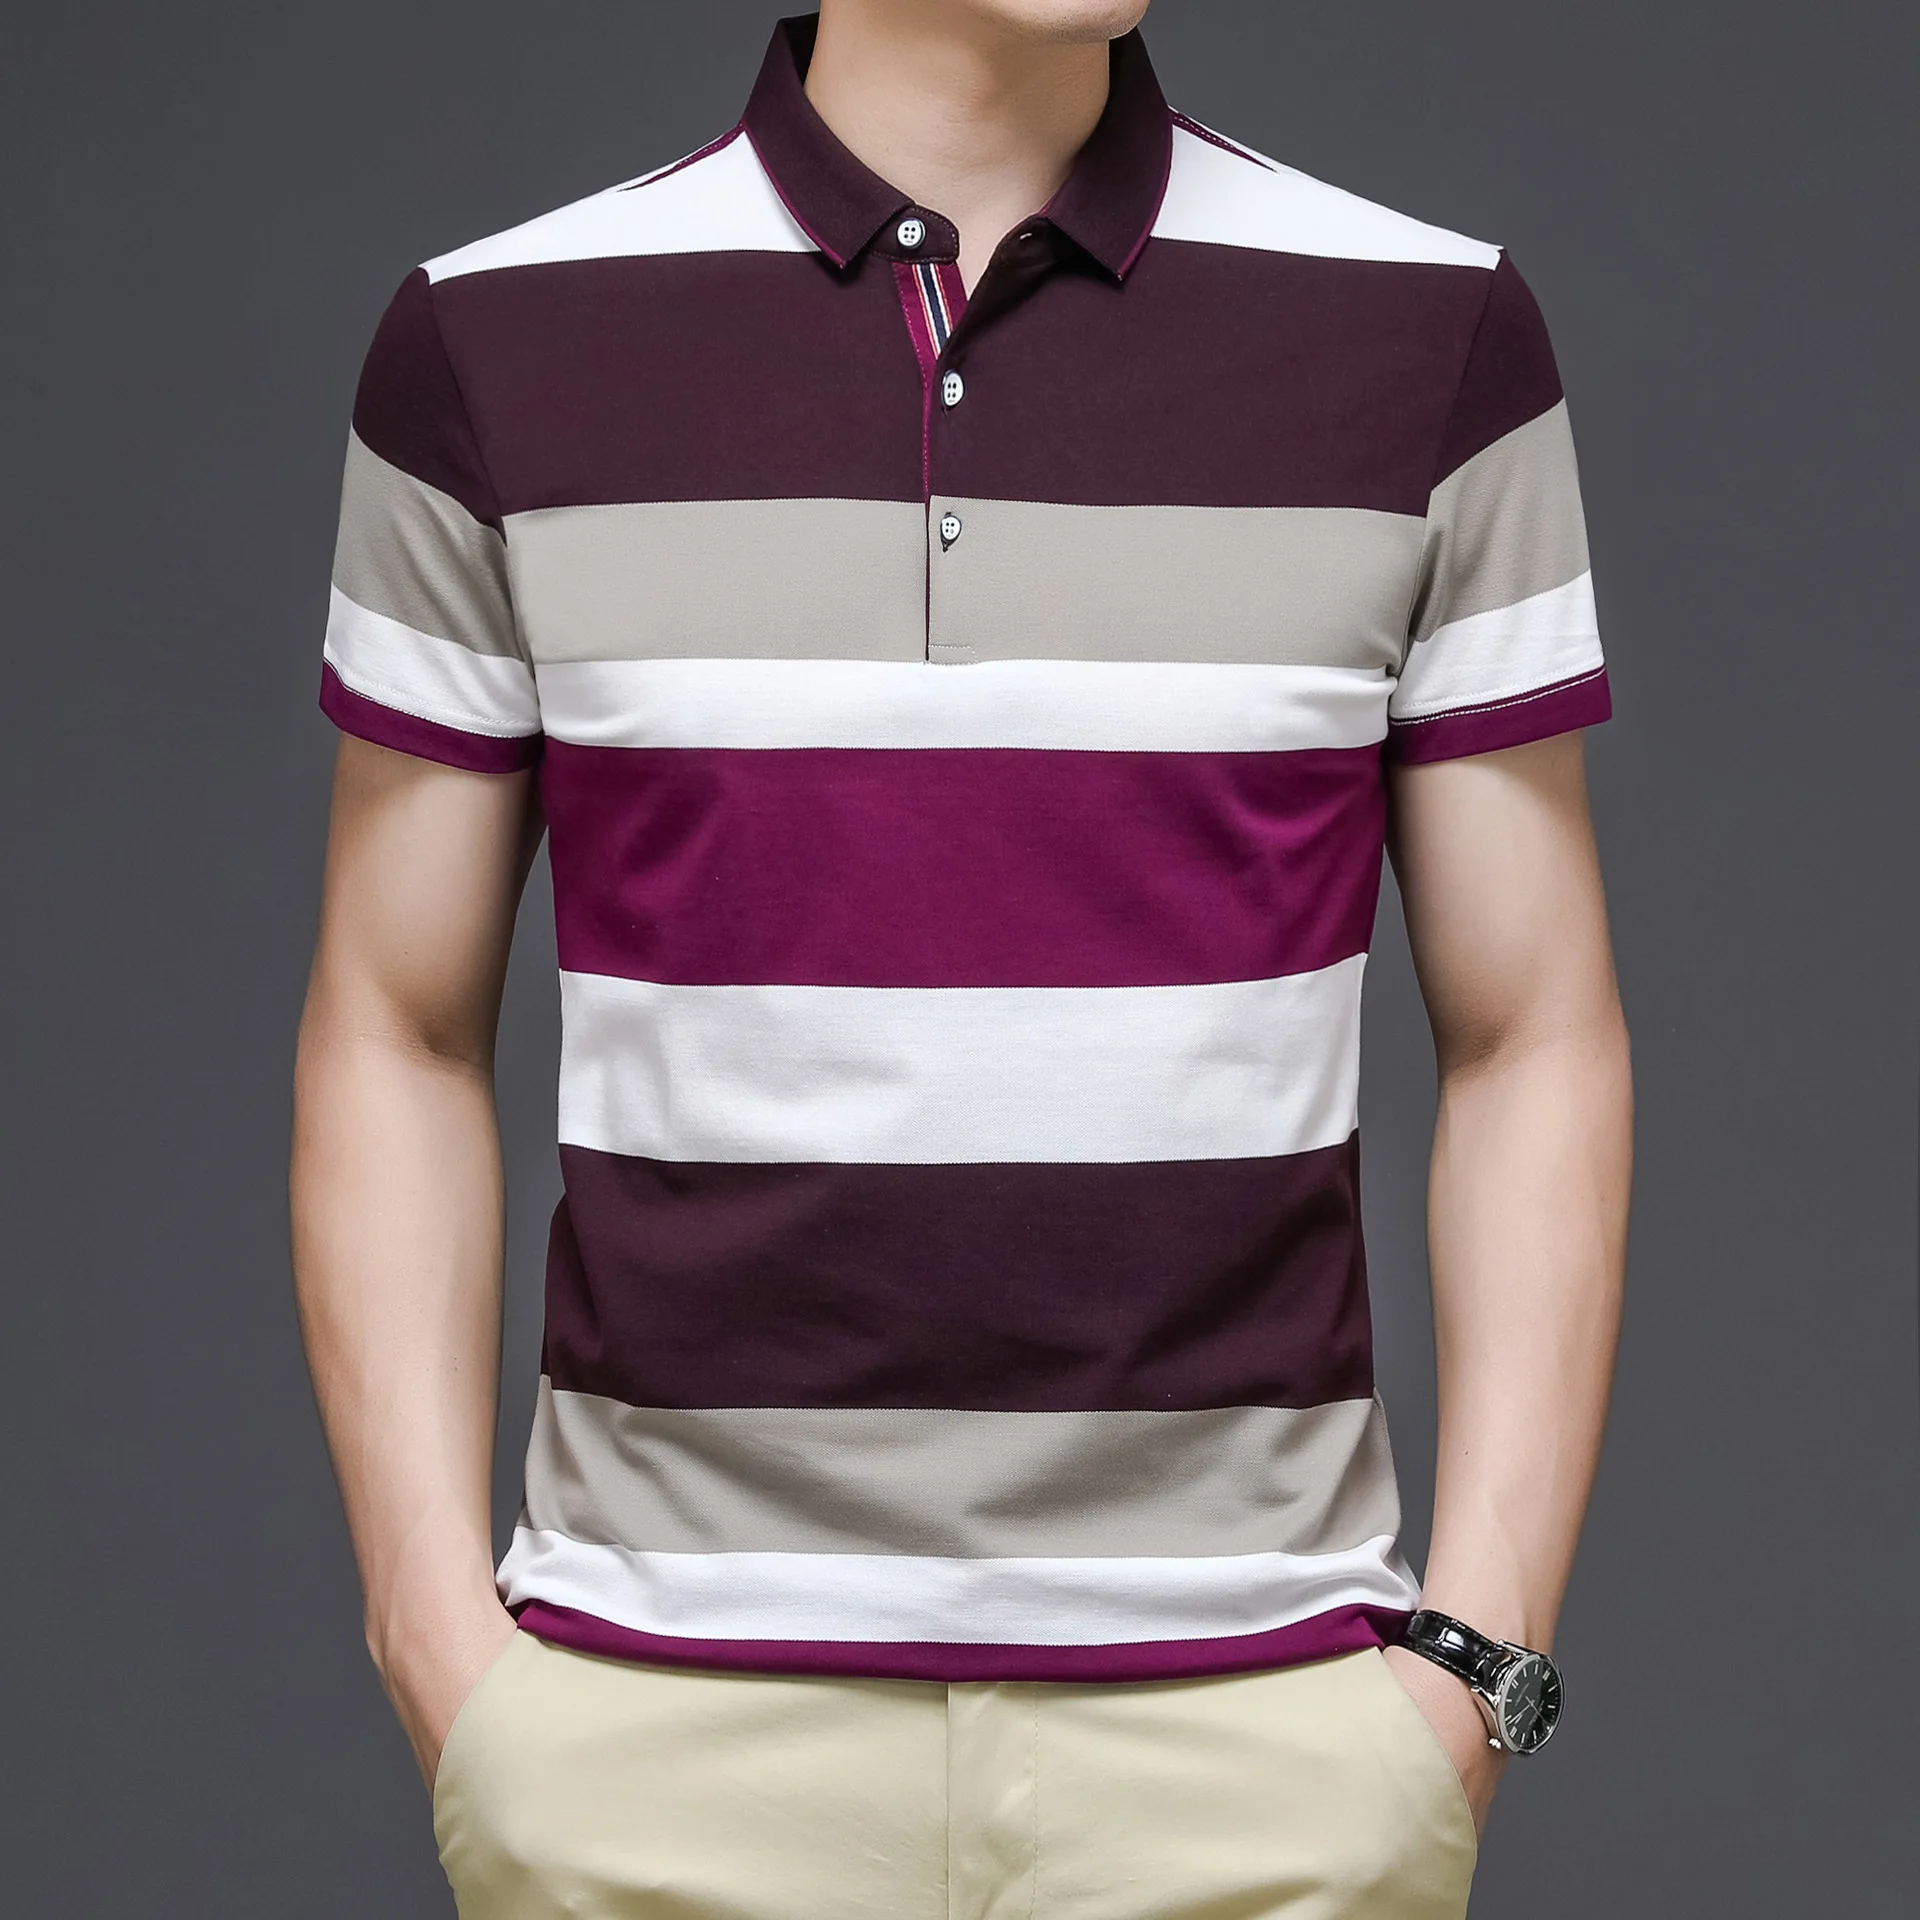 Plain Polo T Shirts For Men Stripe Wholesale Multicolored Polo Shirts ...